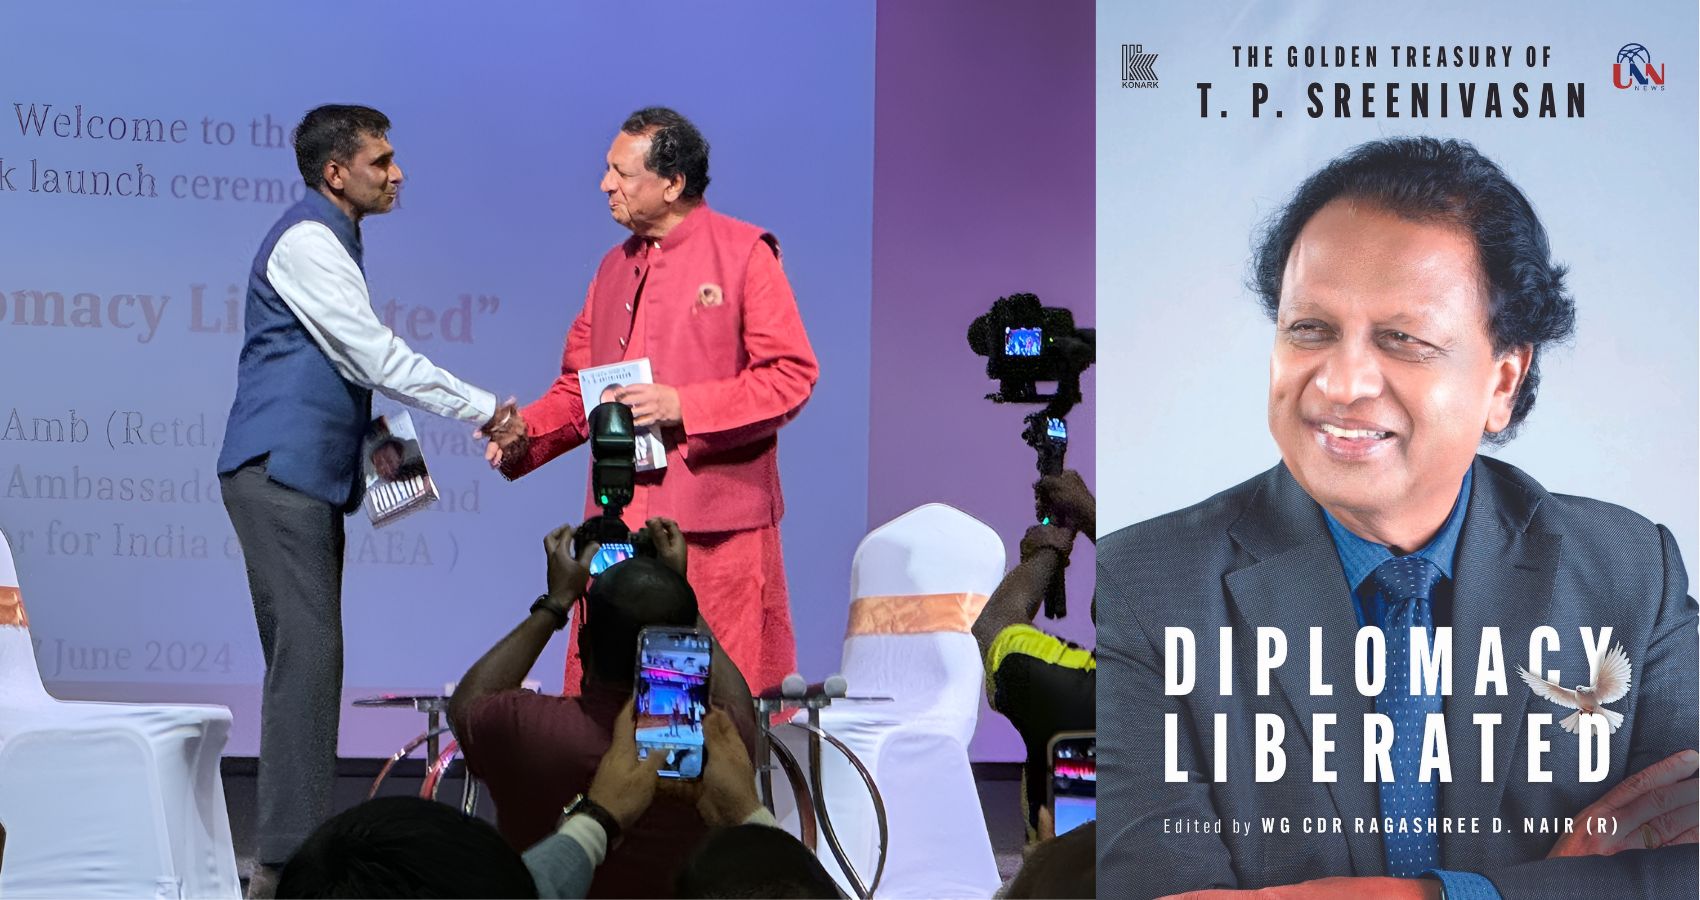 TheUNN Corporation Announces Joint Publication of Ambassador T.P. Sreenivasan’s New Best-Selling Book